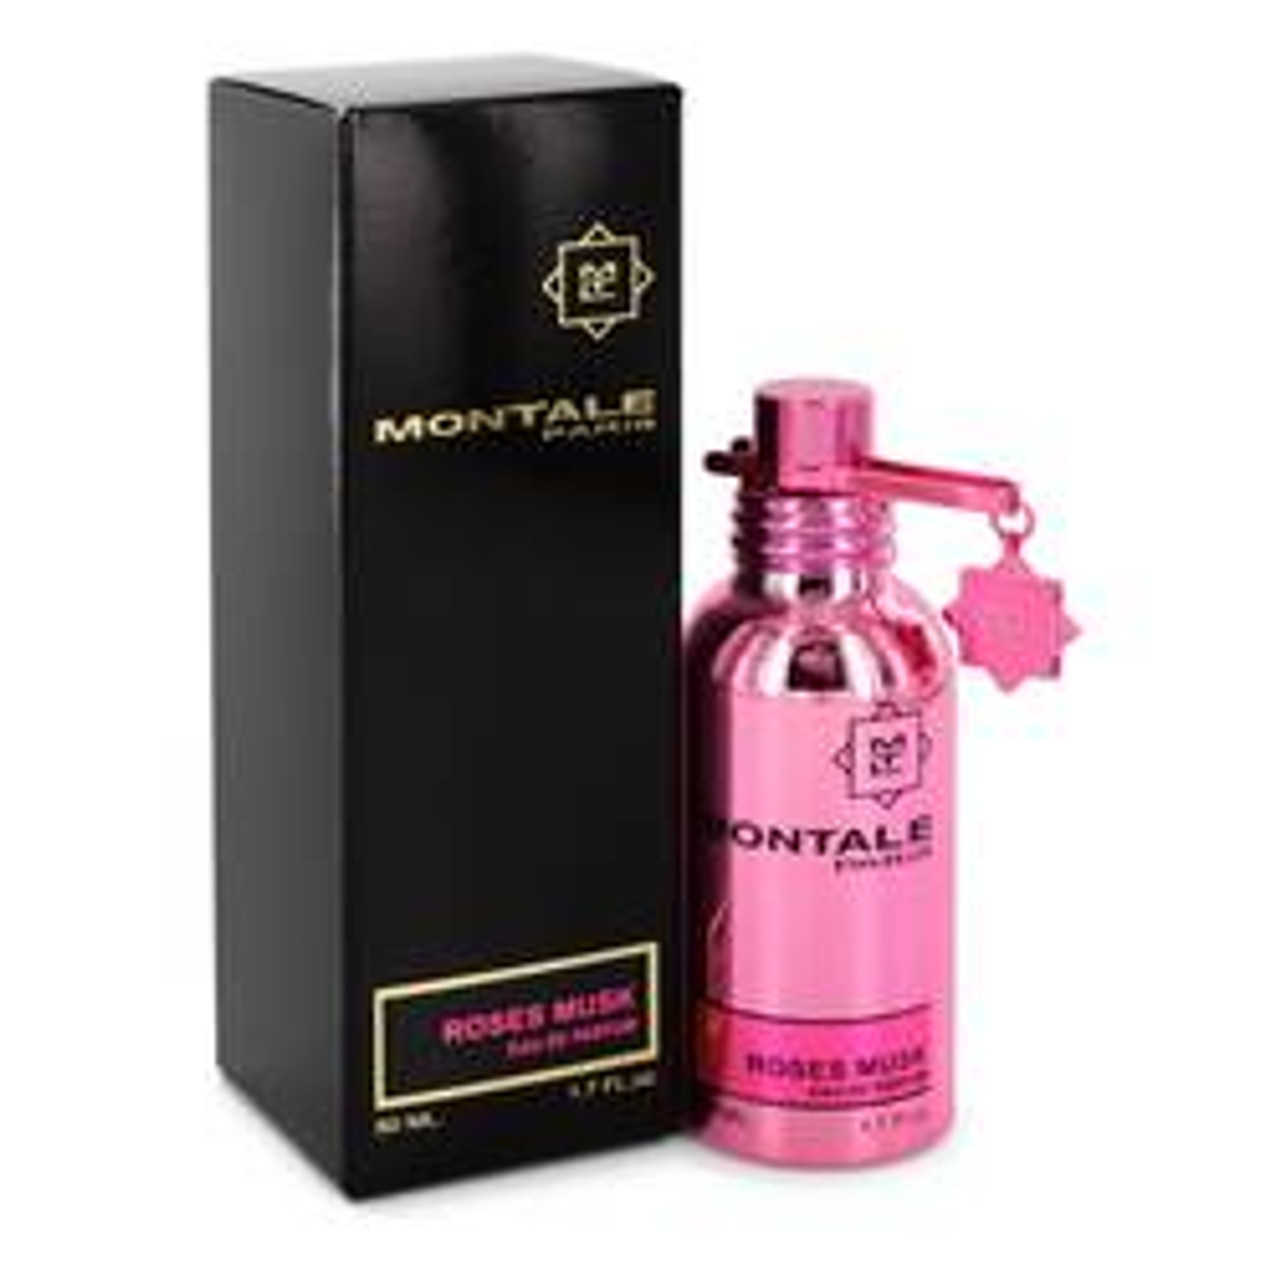 Montale Roses Musk Perfume By Montale Eau De Parfum Spray 1.7 oz for Women - *Pre-Order